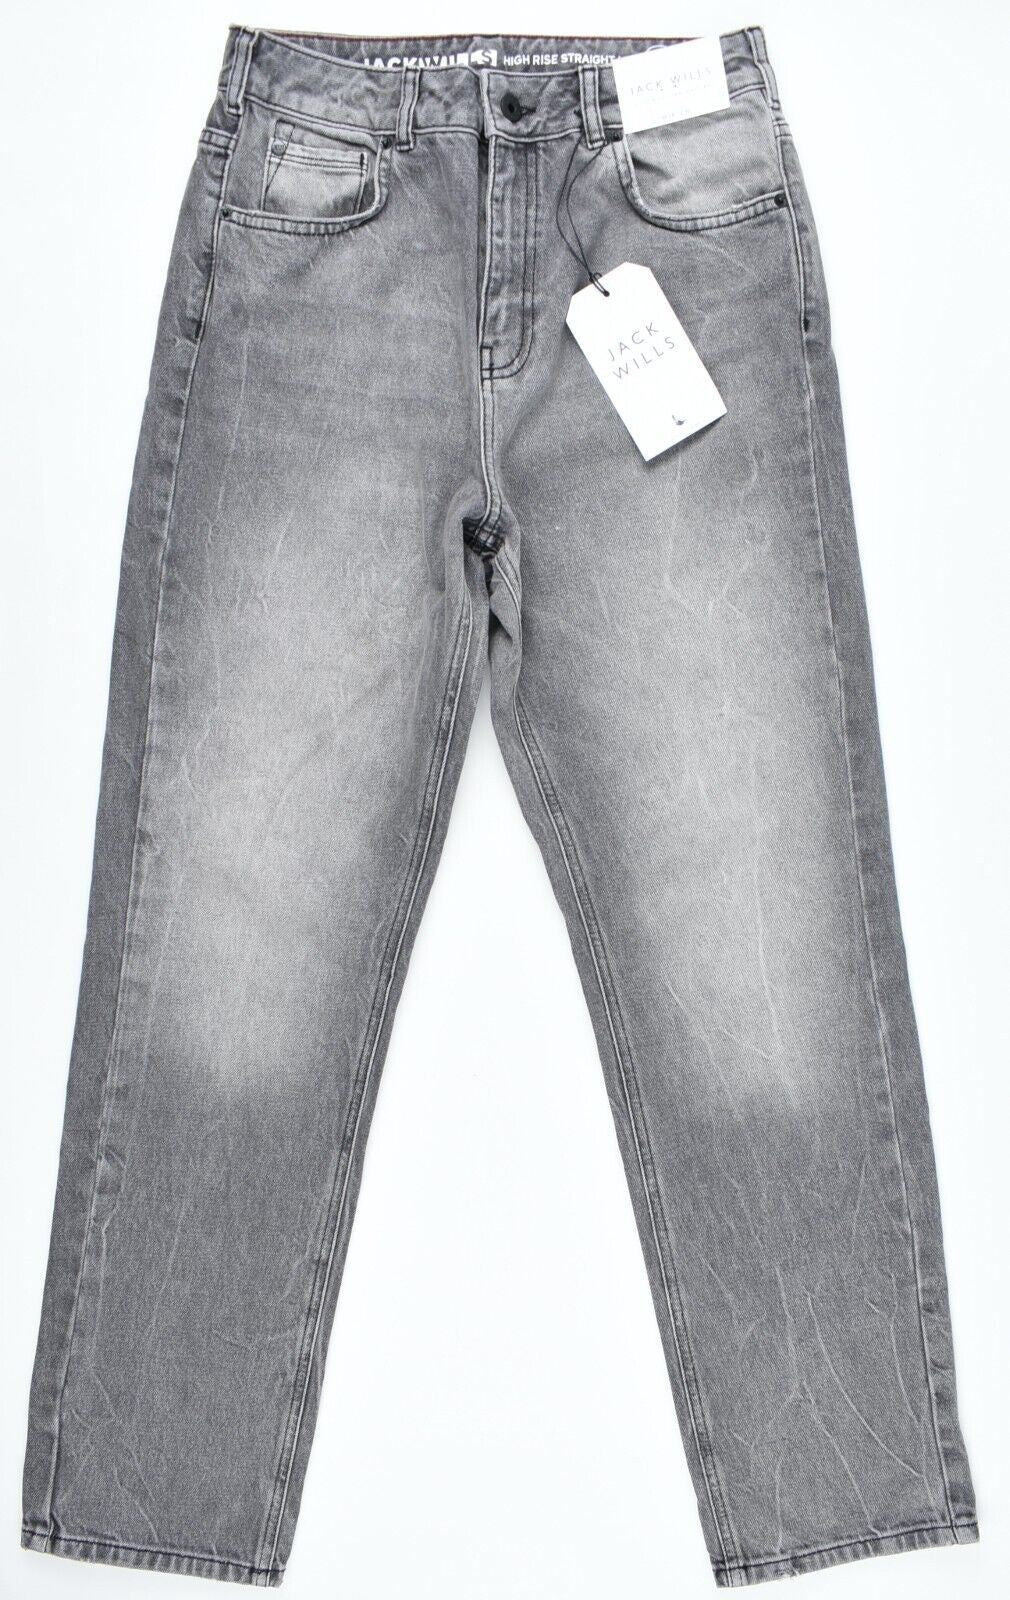 JACK WILLS Women's MADDISON High Rise Straight Leg Jeans, Grey, size W28 R